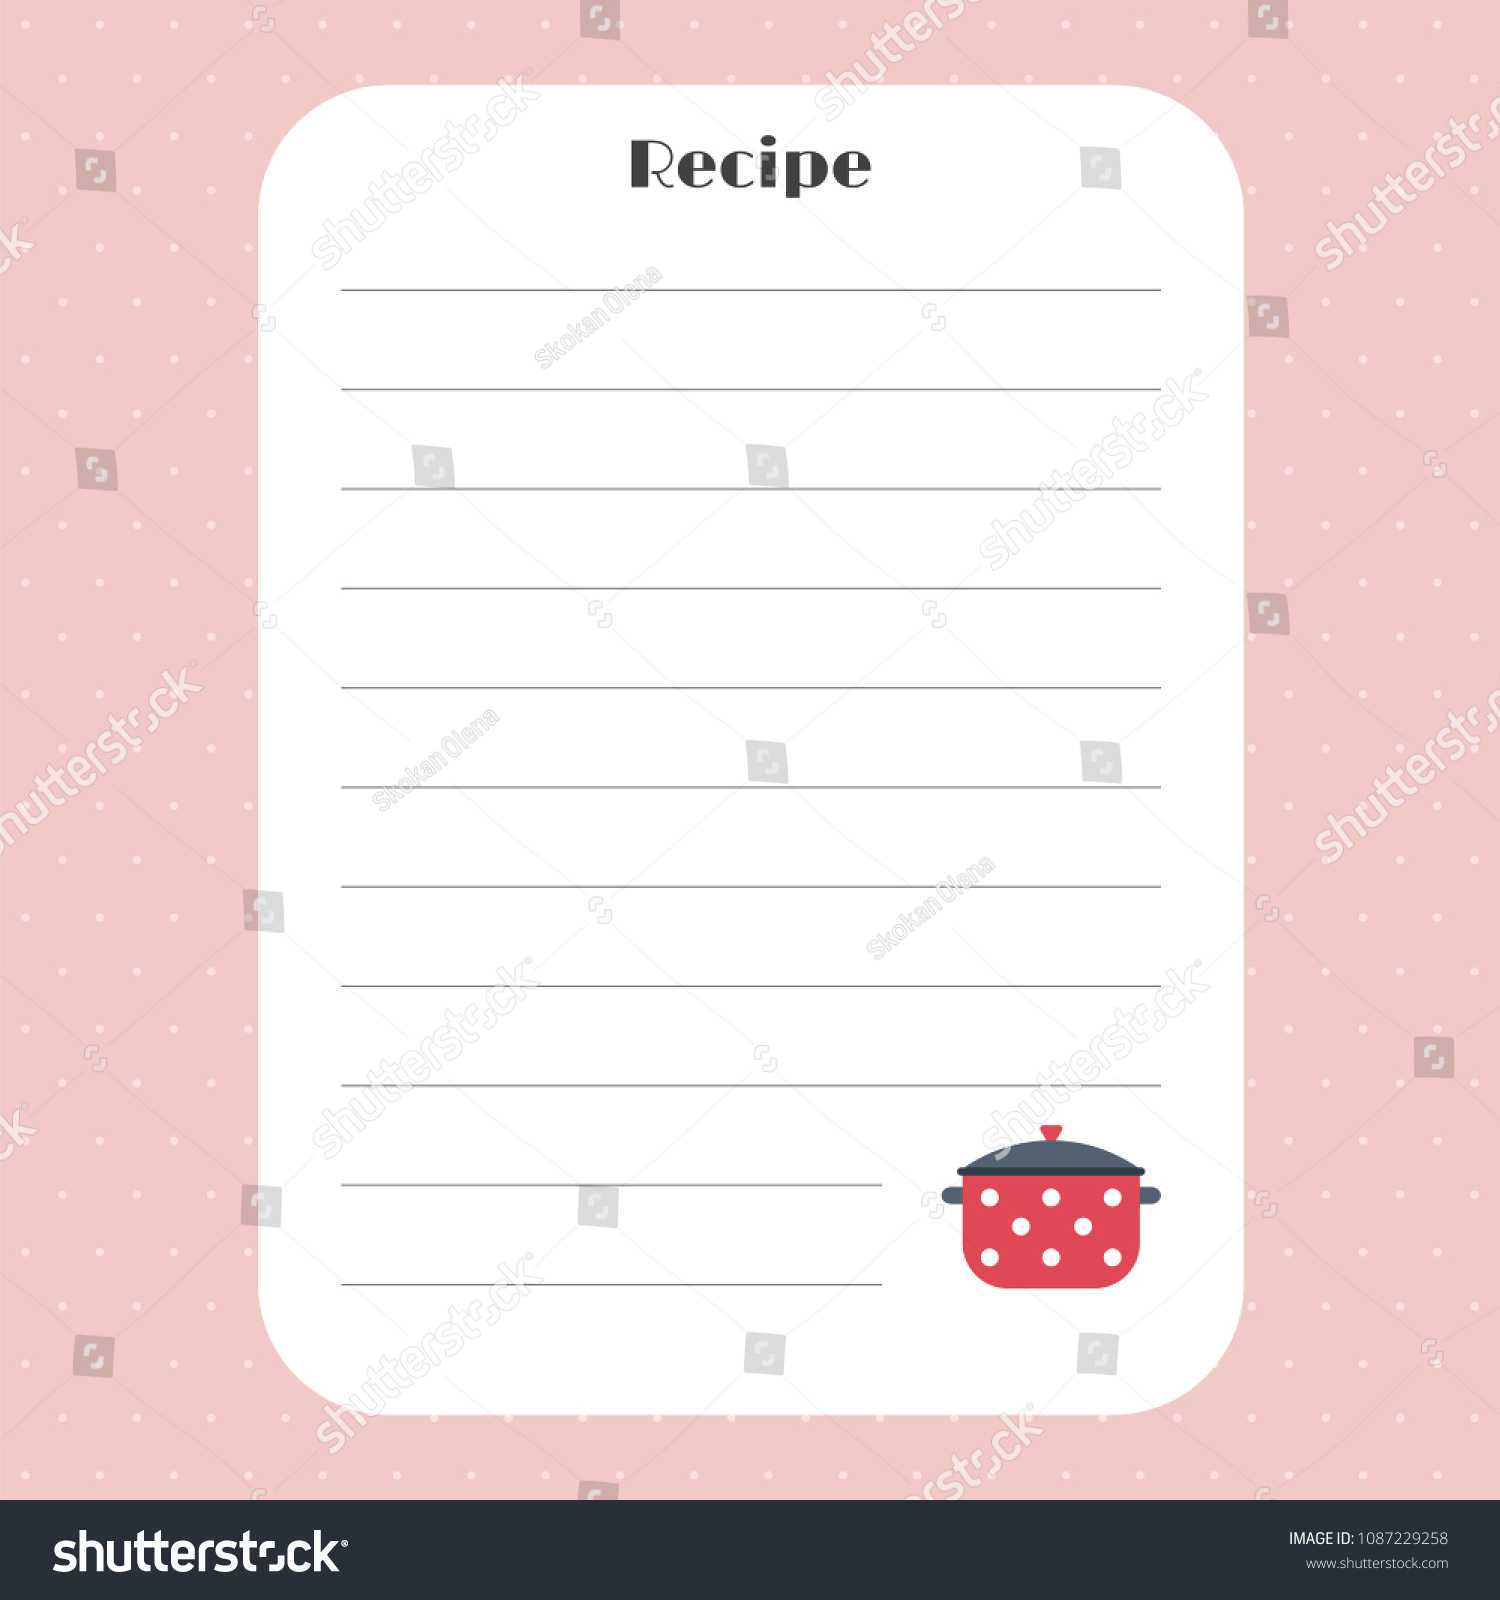 Recipe Card Template Restaurant Cafe Bakery Stock Vector Inside Restaurant Recipe Card Template